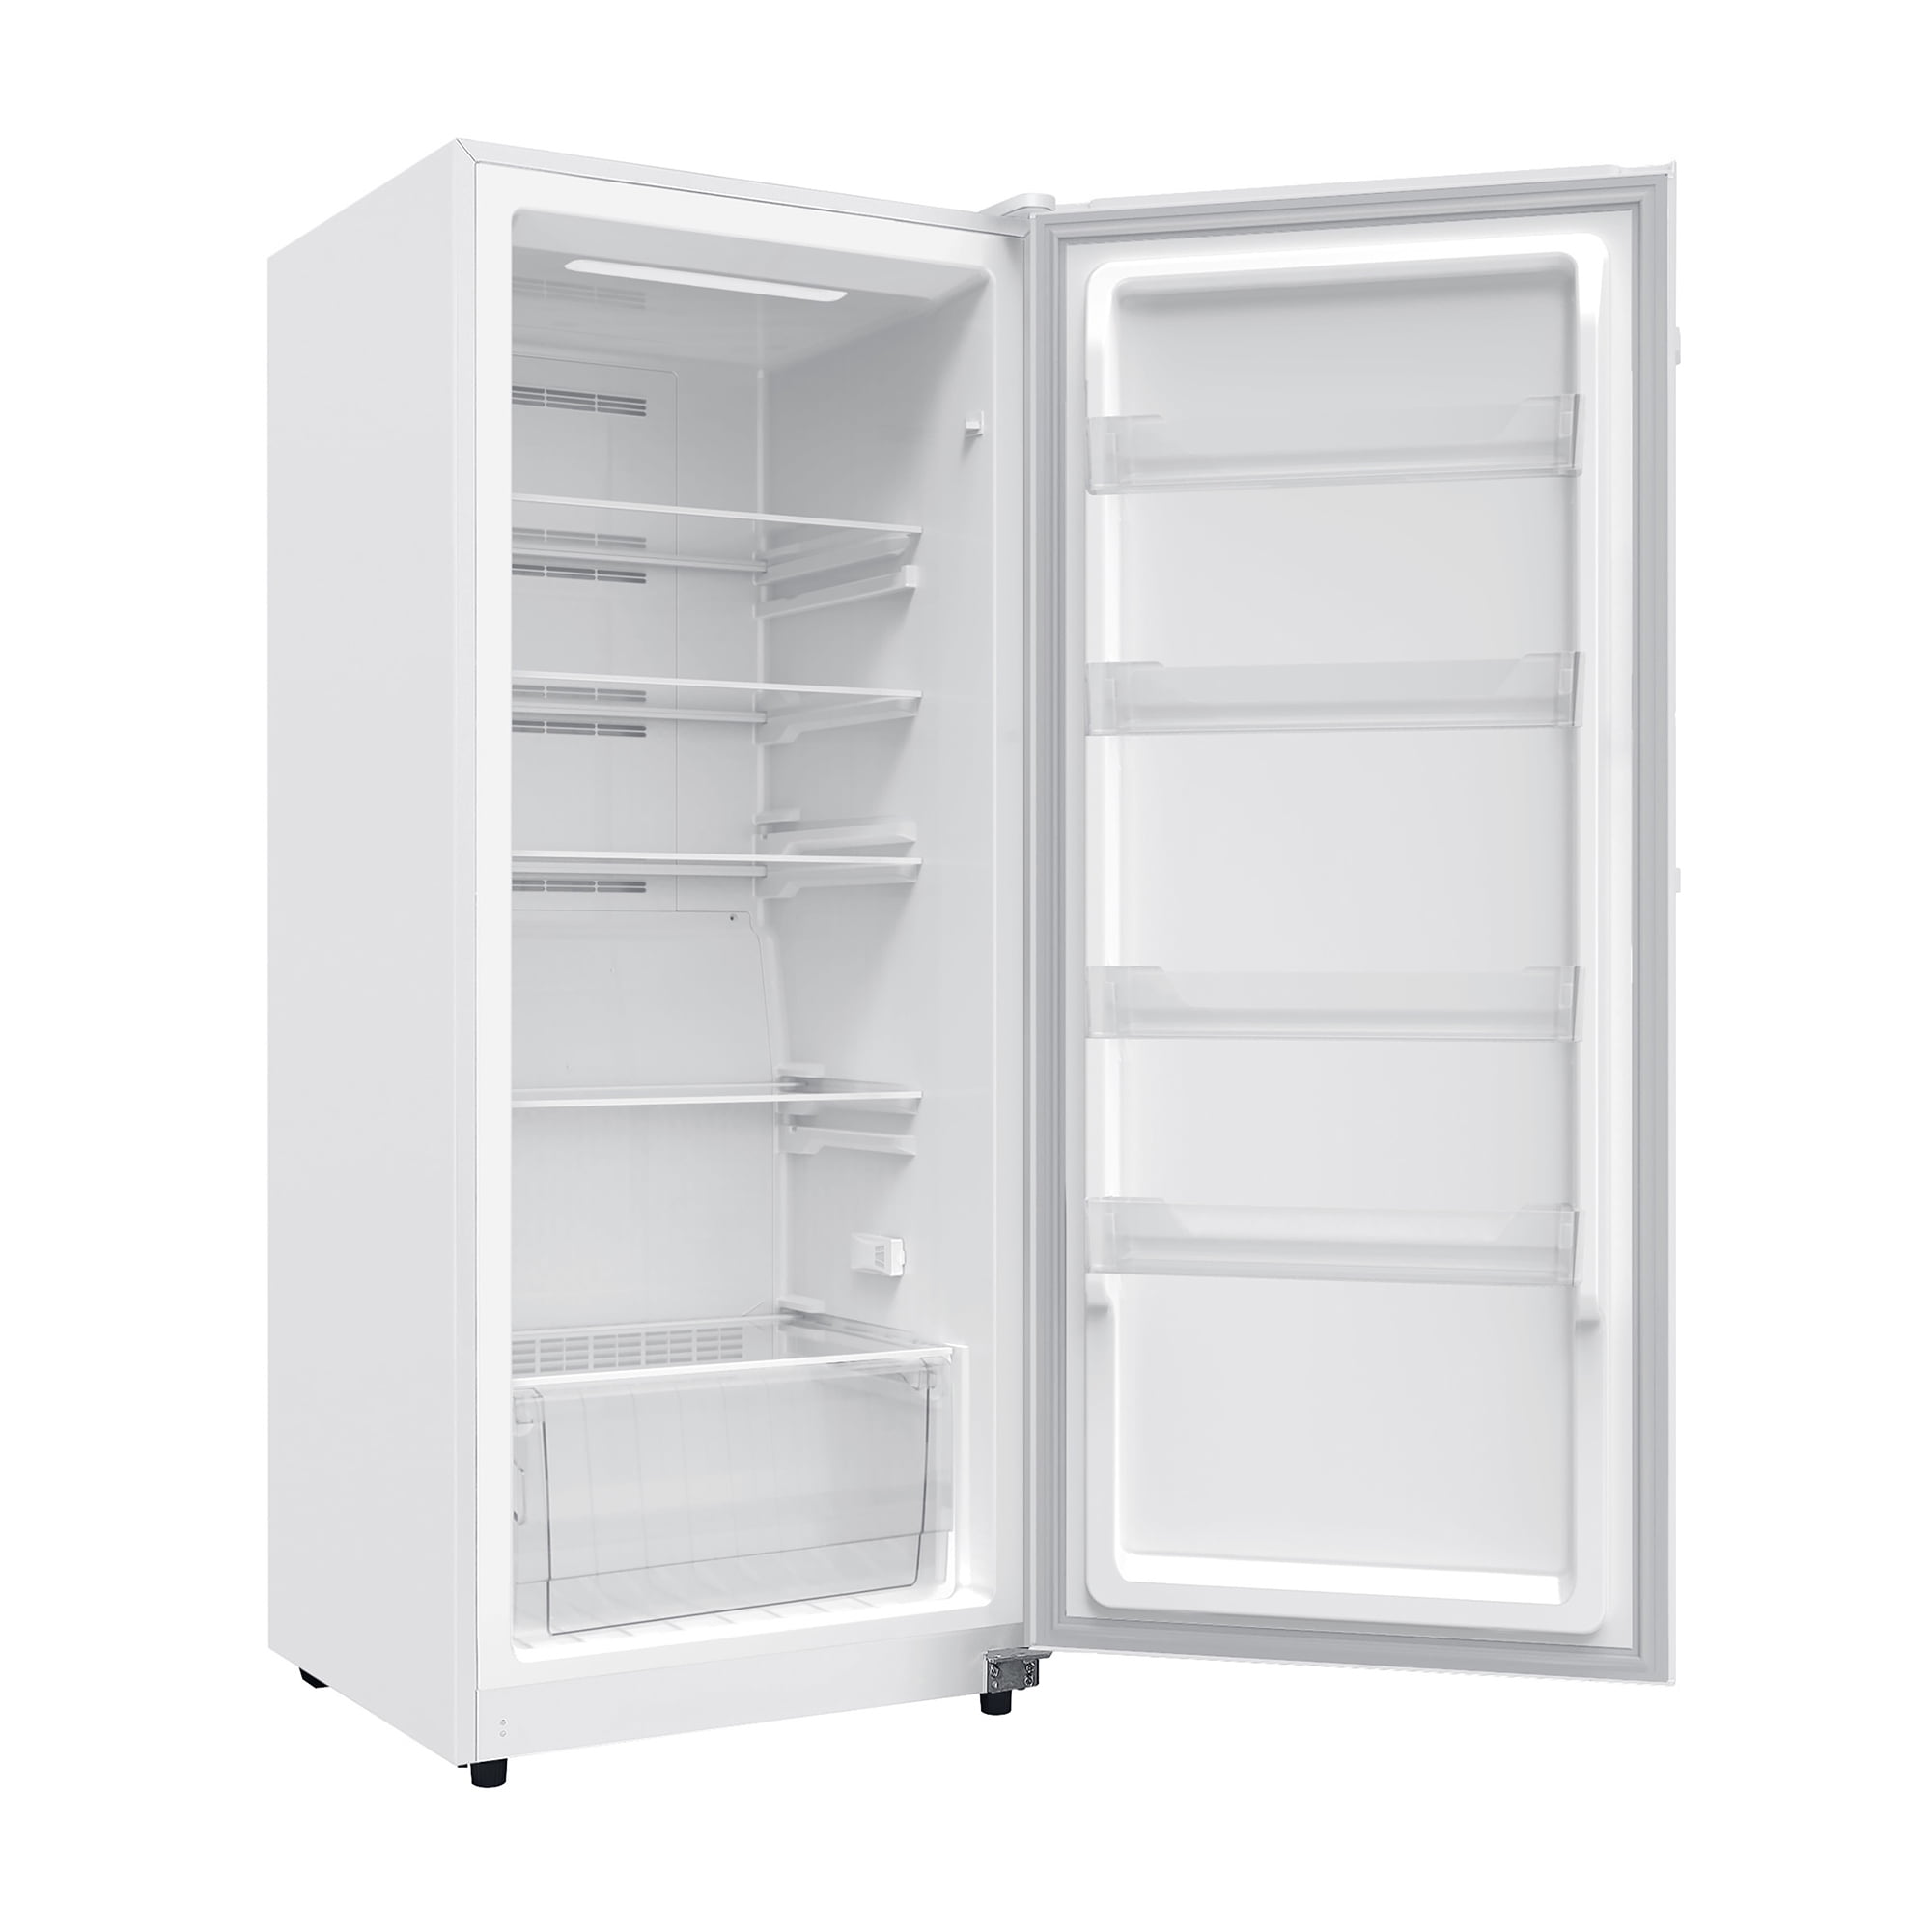 Hamilton Beach,14 Cu. ft. Upright Convertible Freezer and Refrigerator, HBFRF1494, White